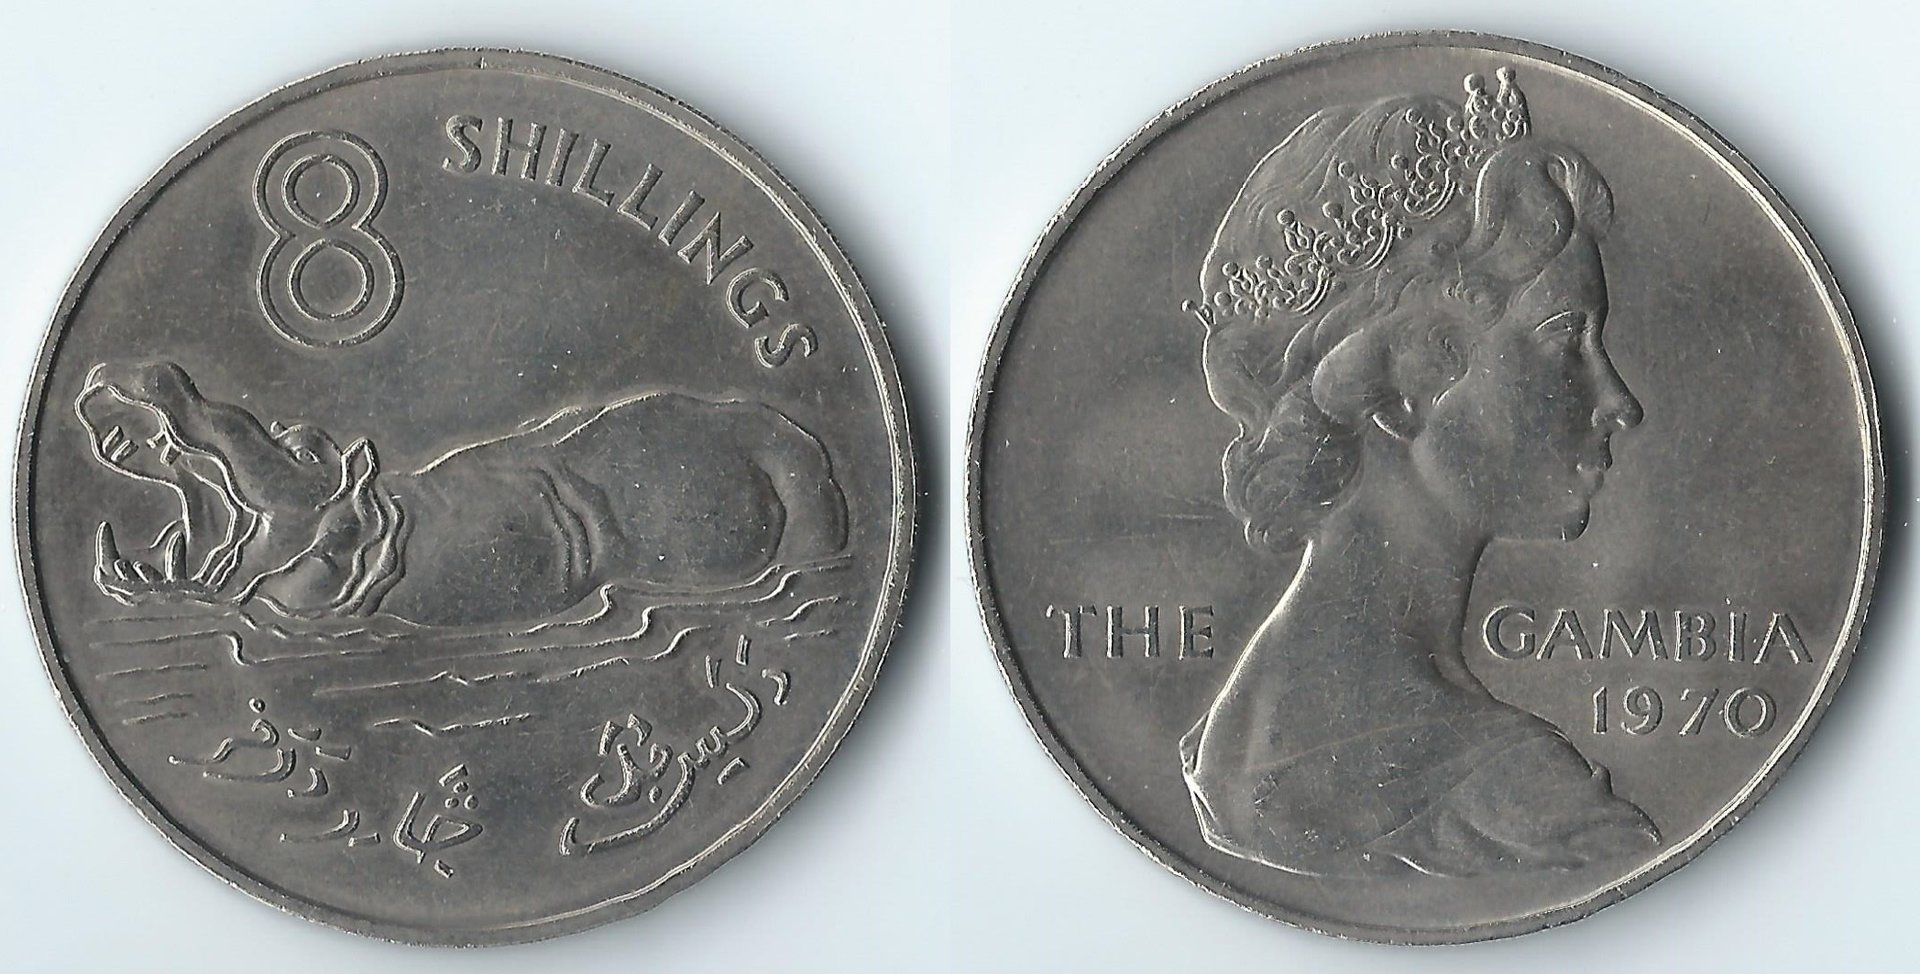 1970 gambia 8 shillings.jpg